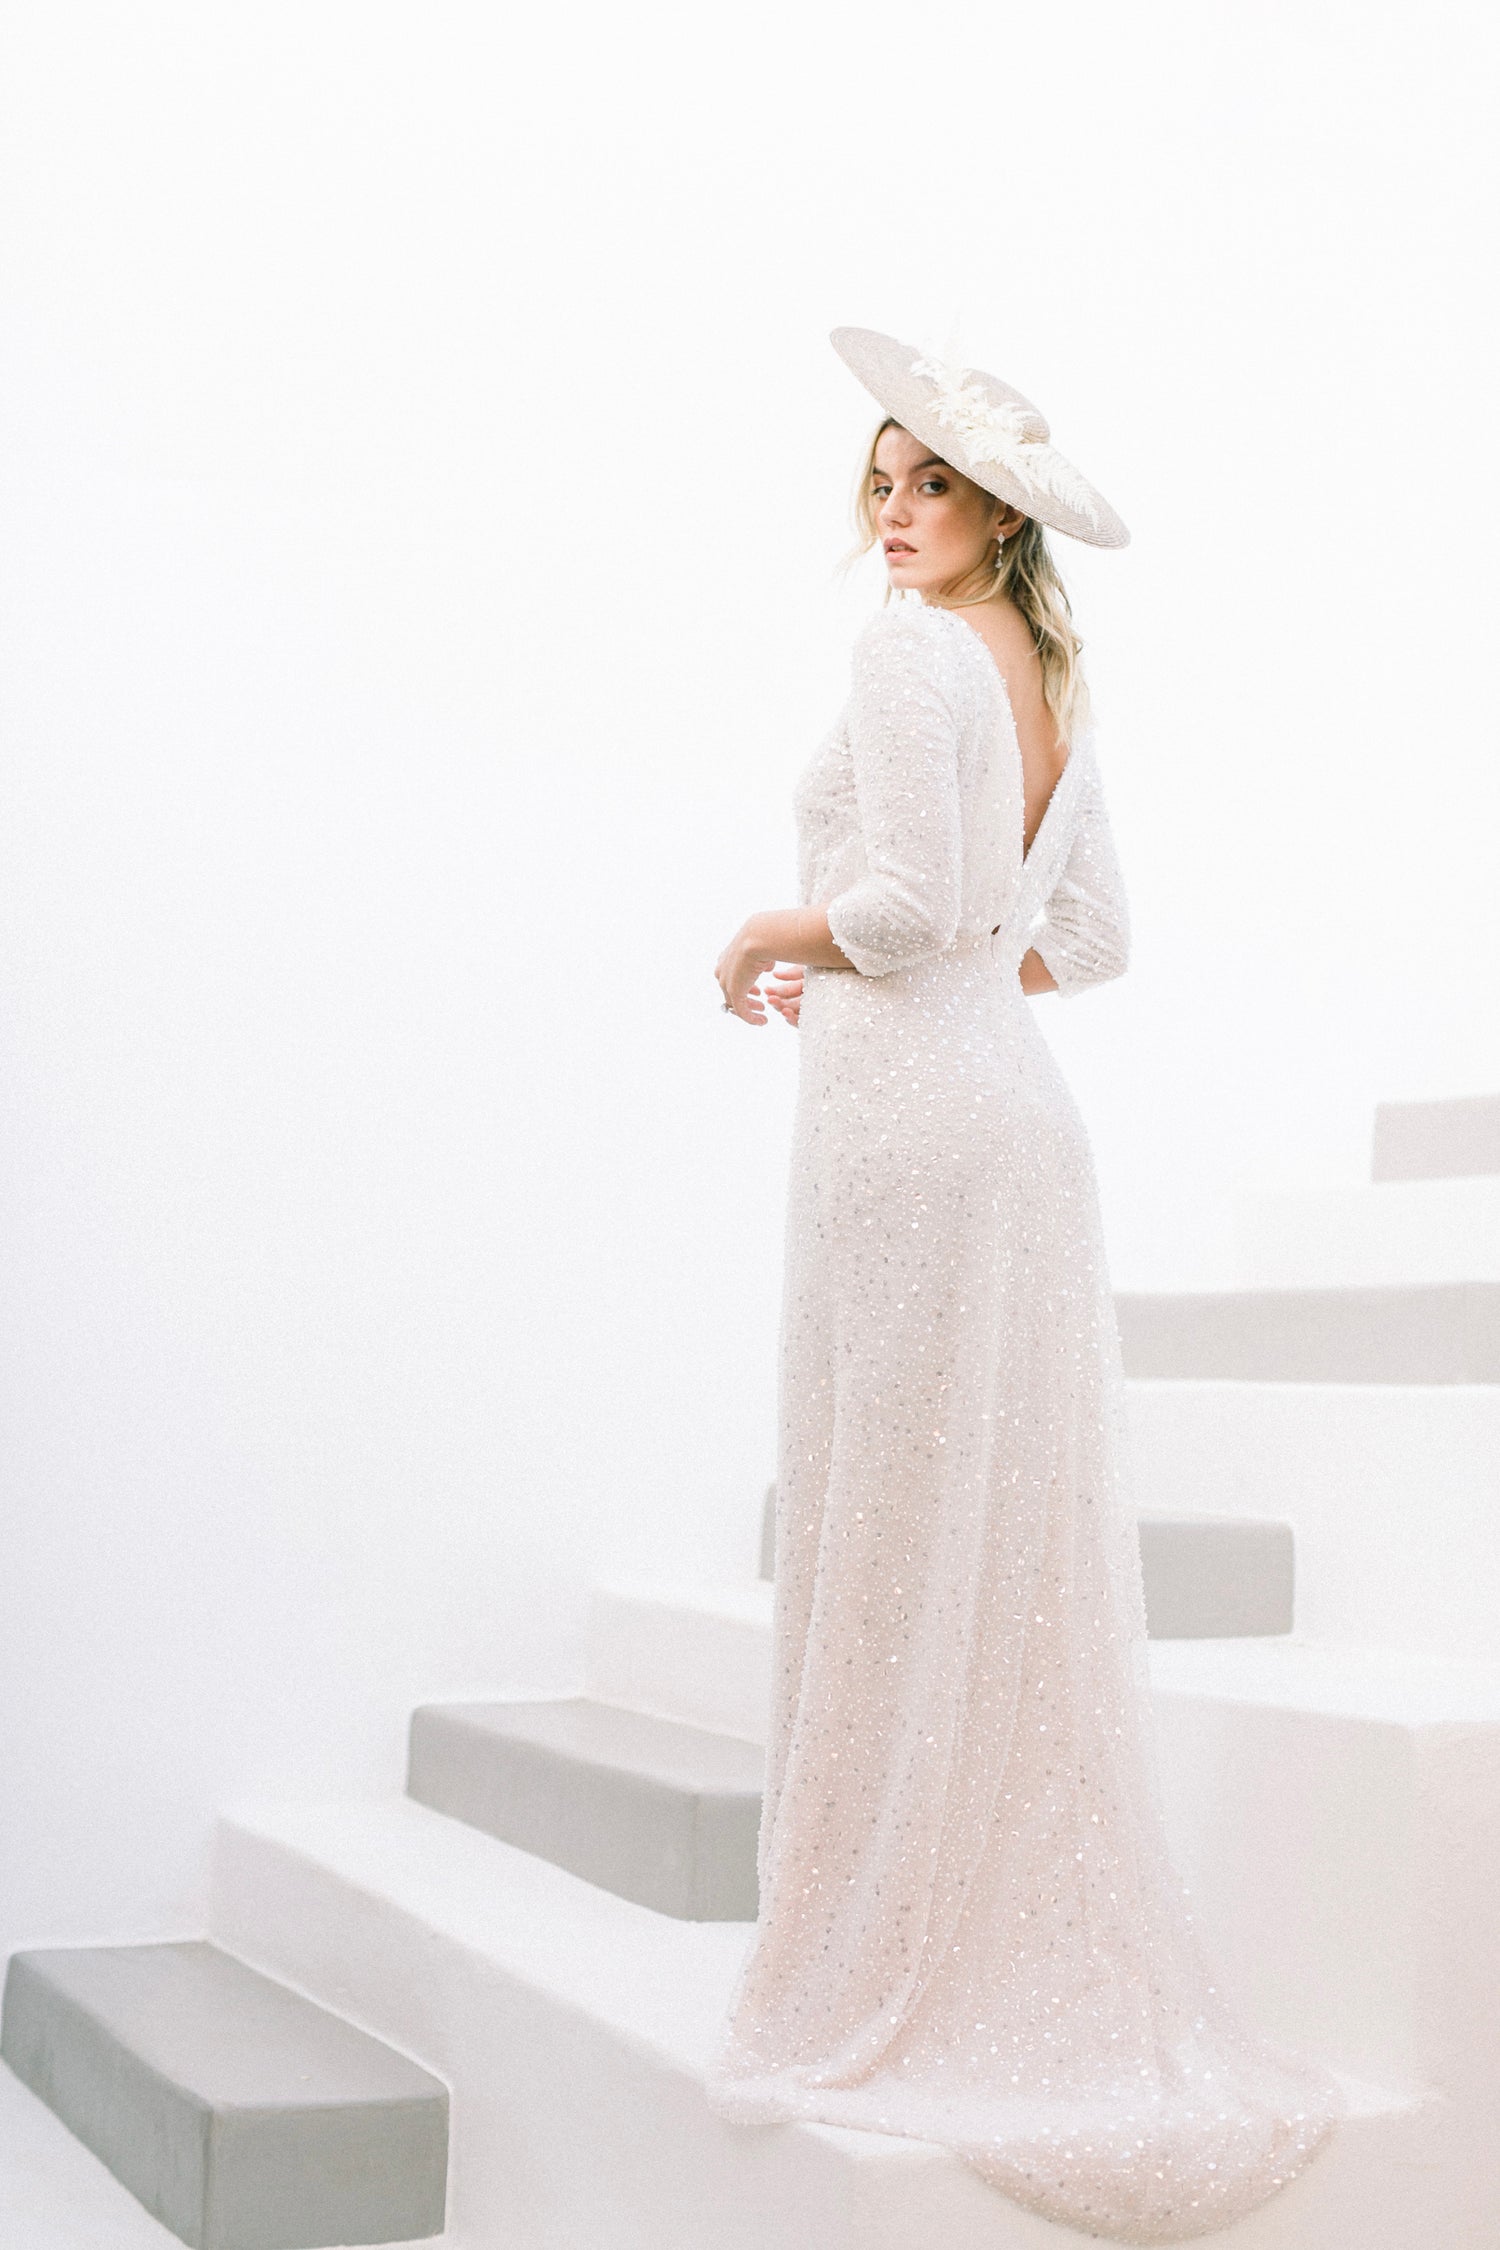 Sequins dress, wooven hat, bride, wedding in Paros